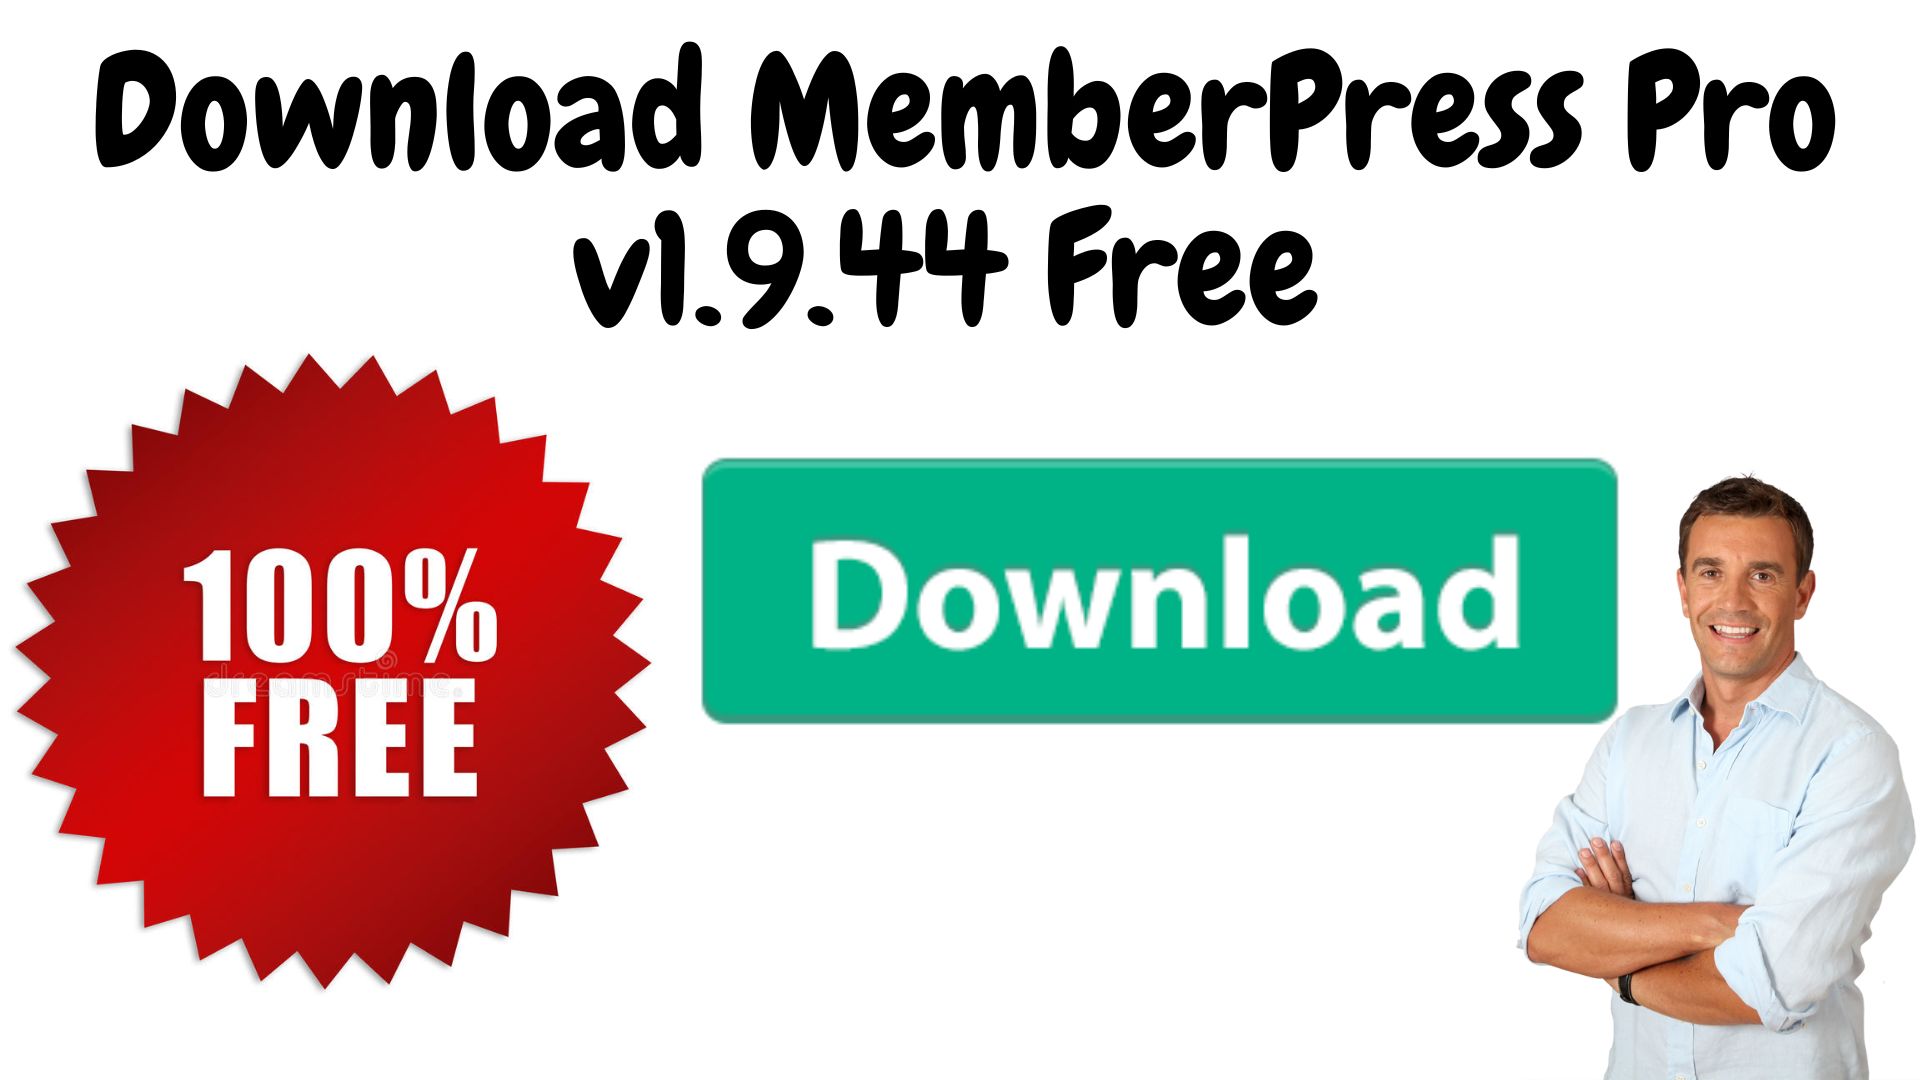 Download memberpress pro v1. 9. 44 free